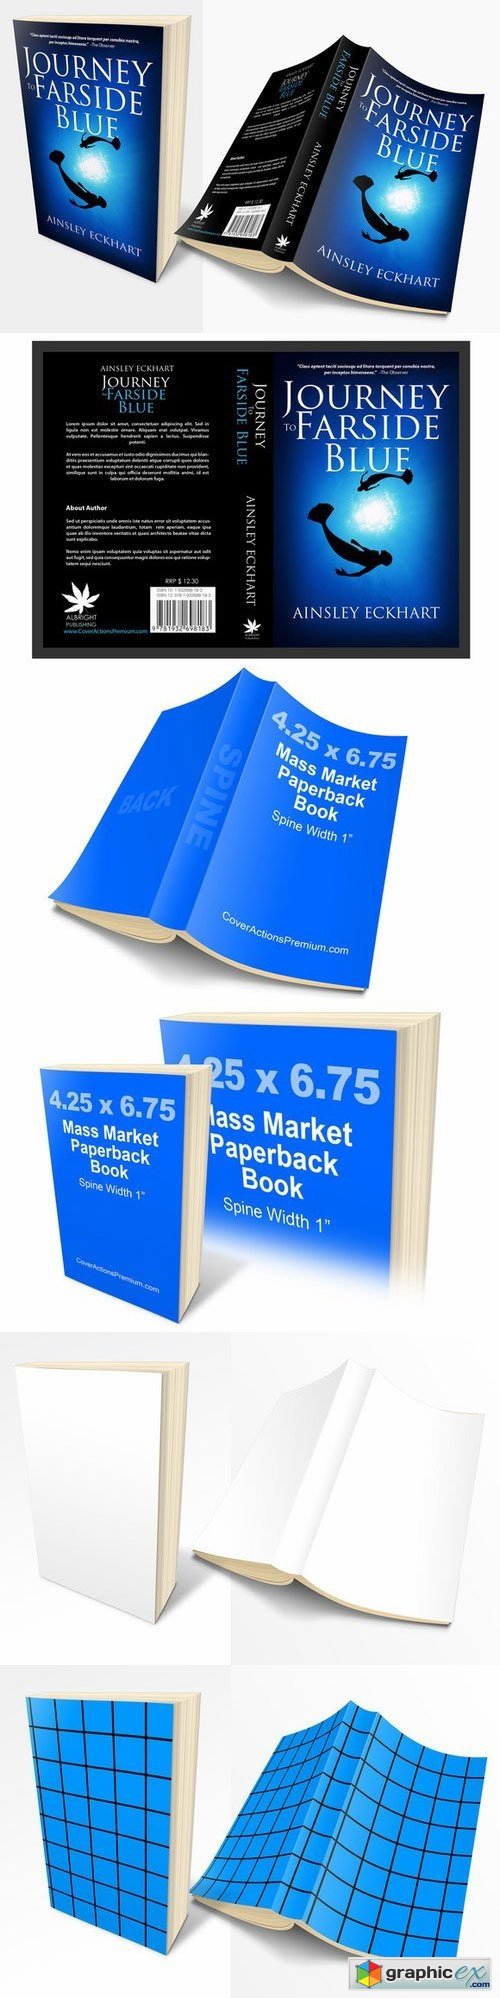 Mass Market Paperback Book Mockup